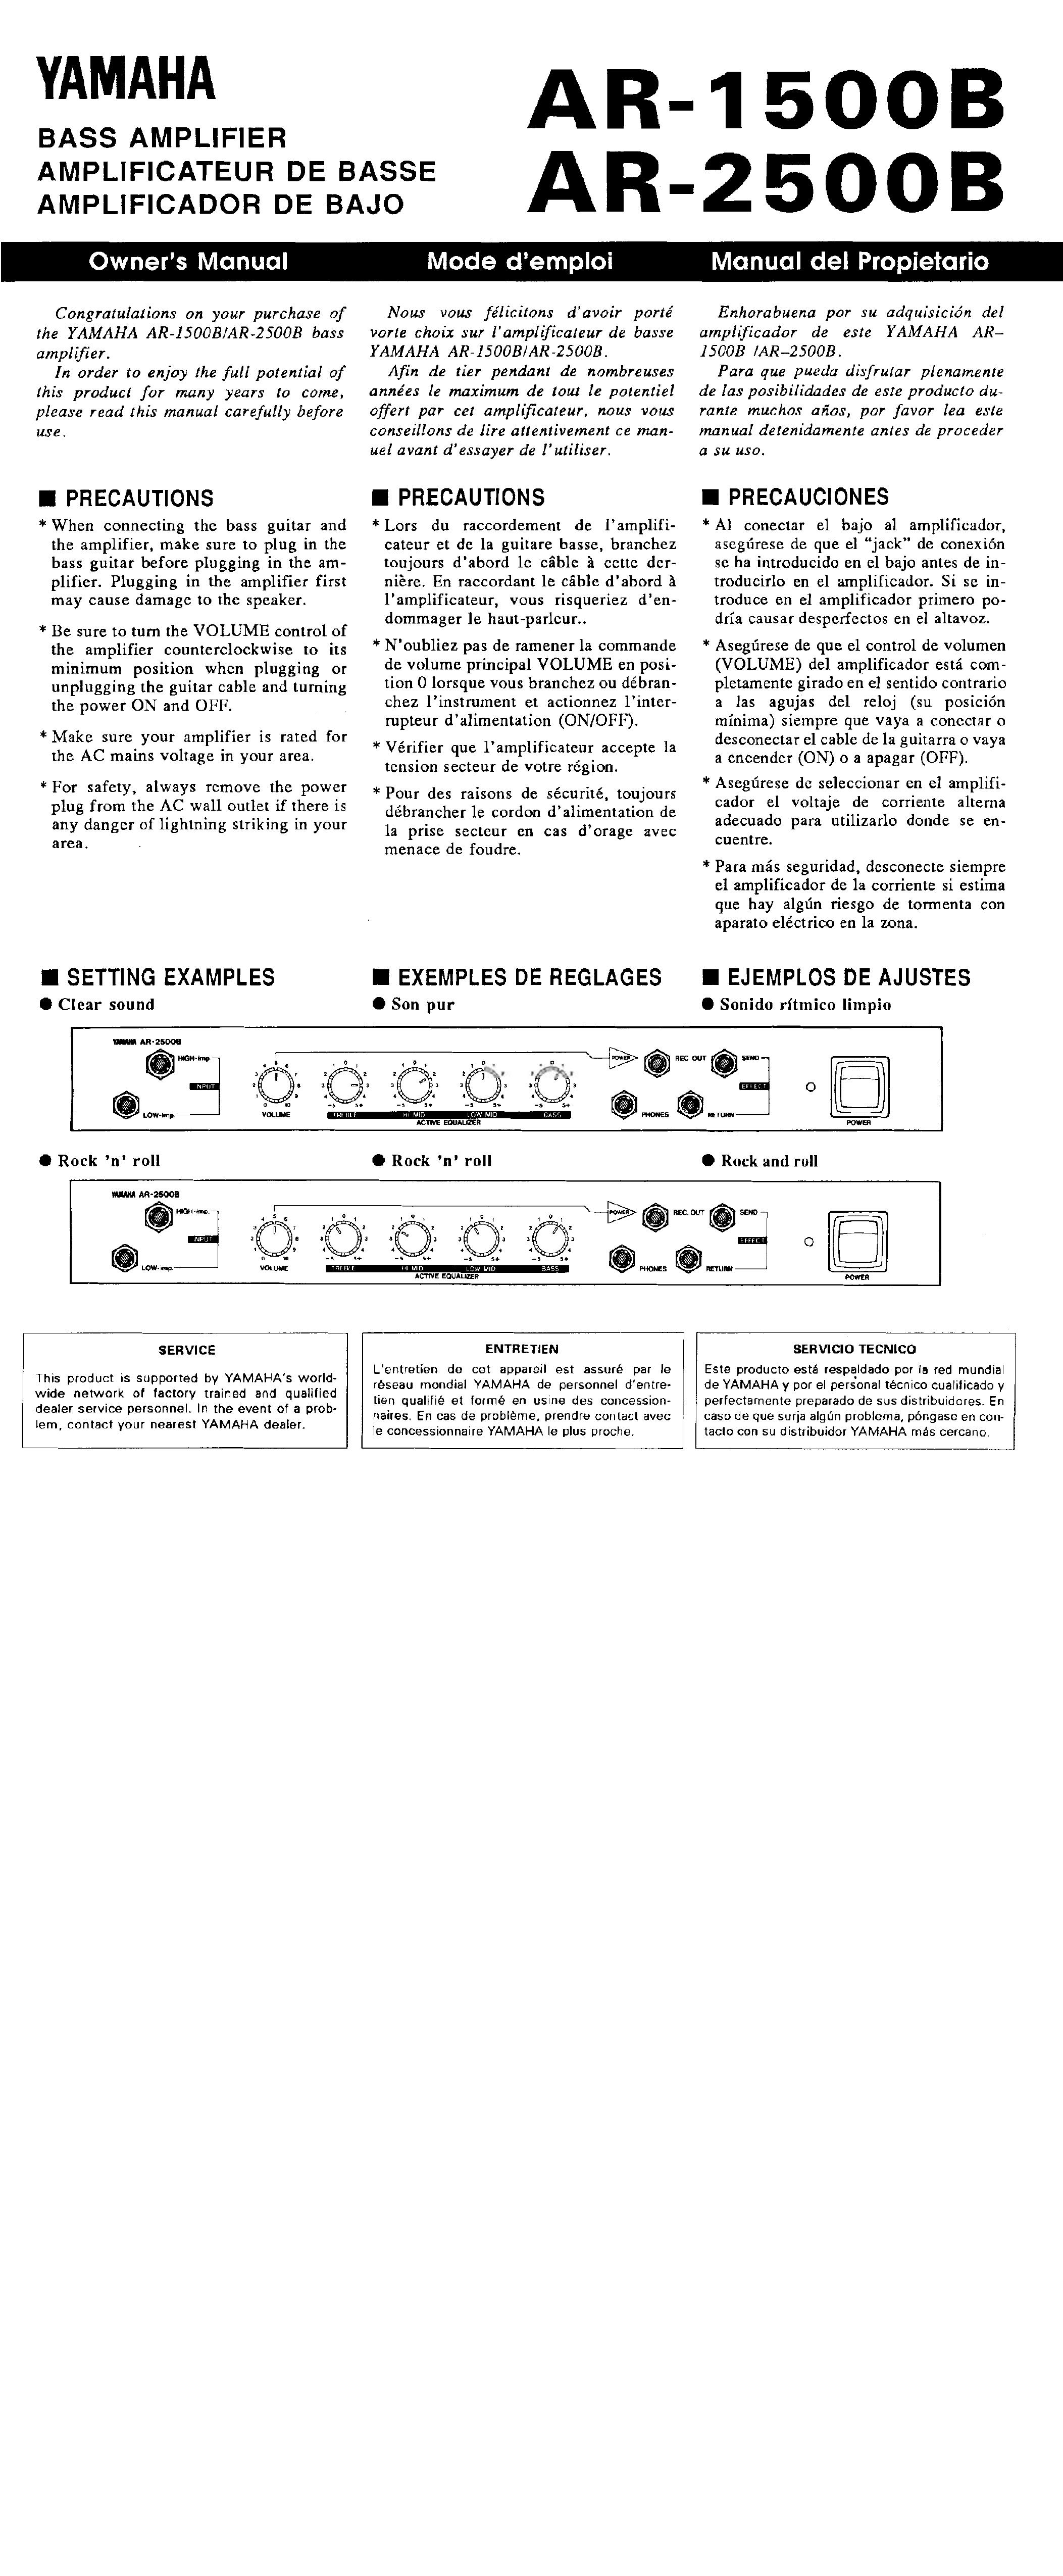 Yamaha AR-2500B Musical Instrument Amplifier User Manual